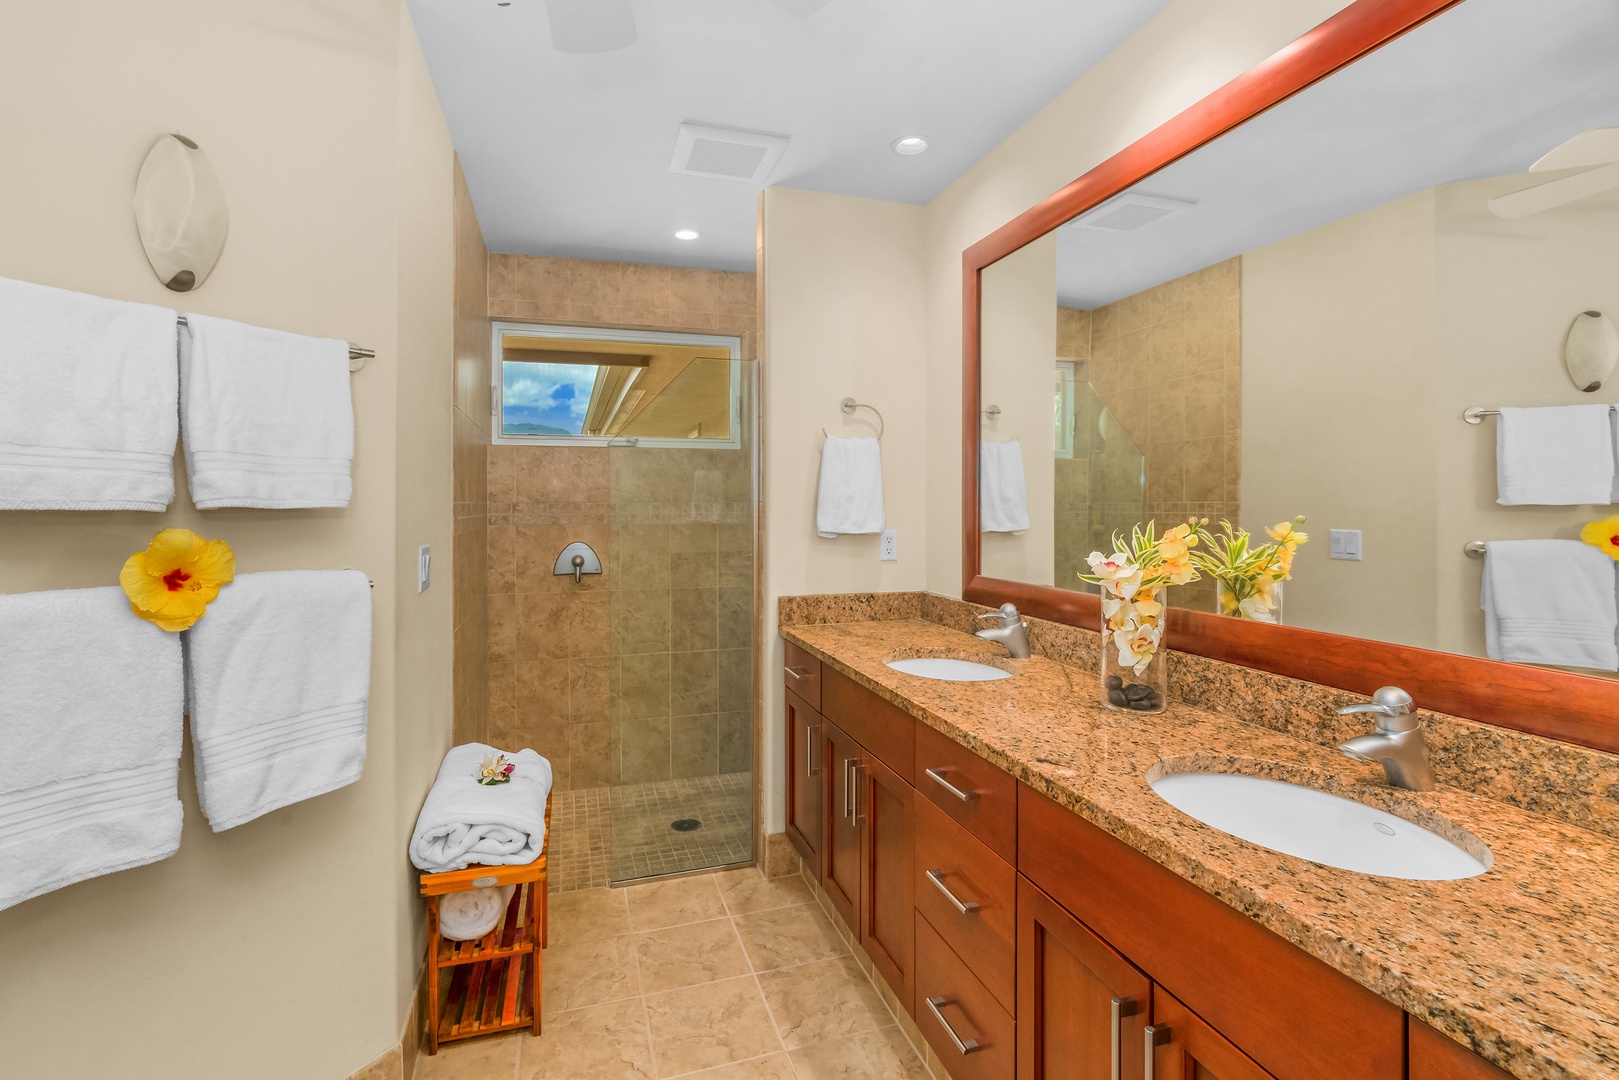 Princeville Vacation Rentals, Noelani Kai - Spacious vanity area with dual sink